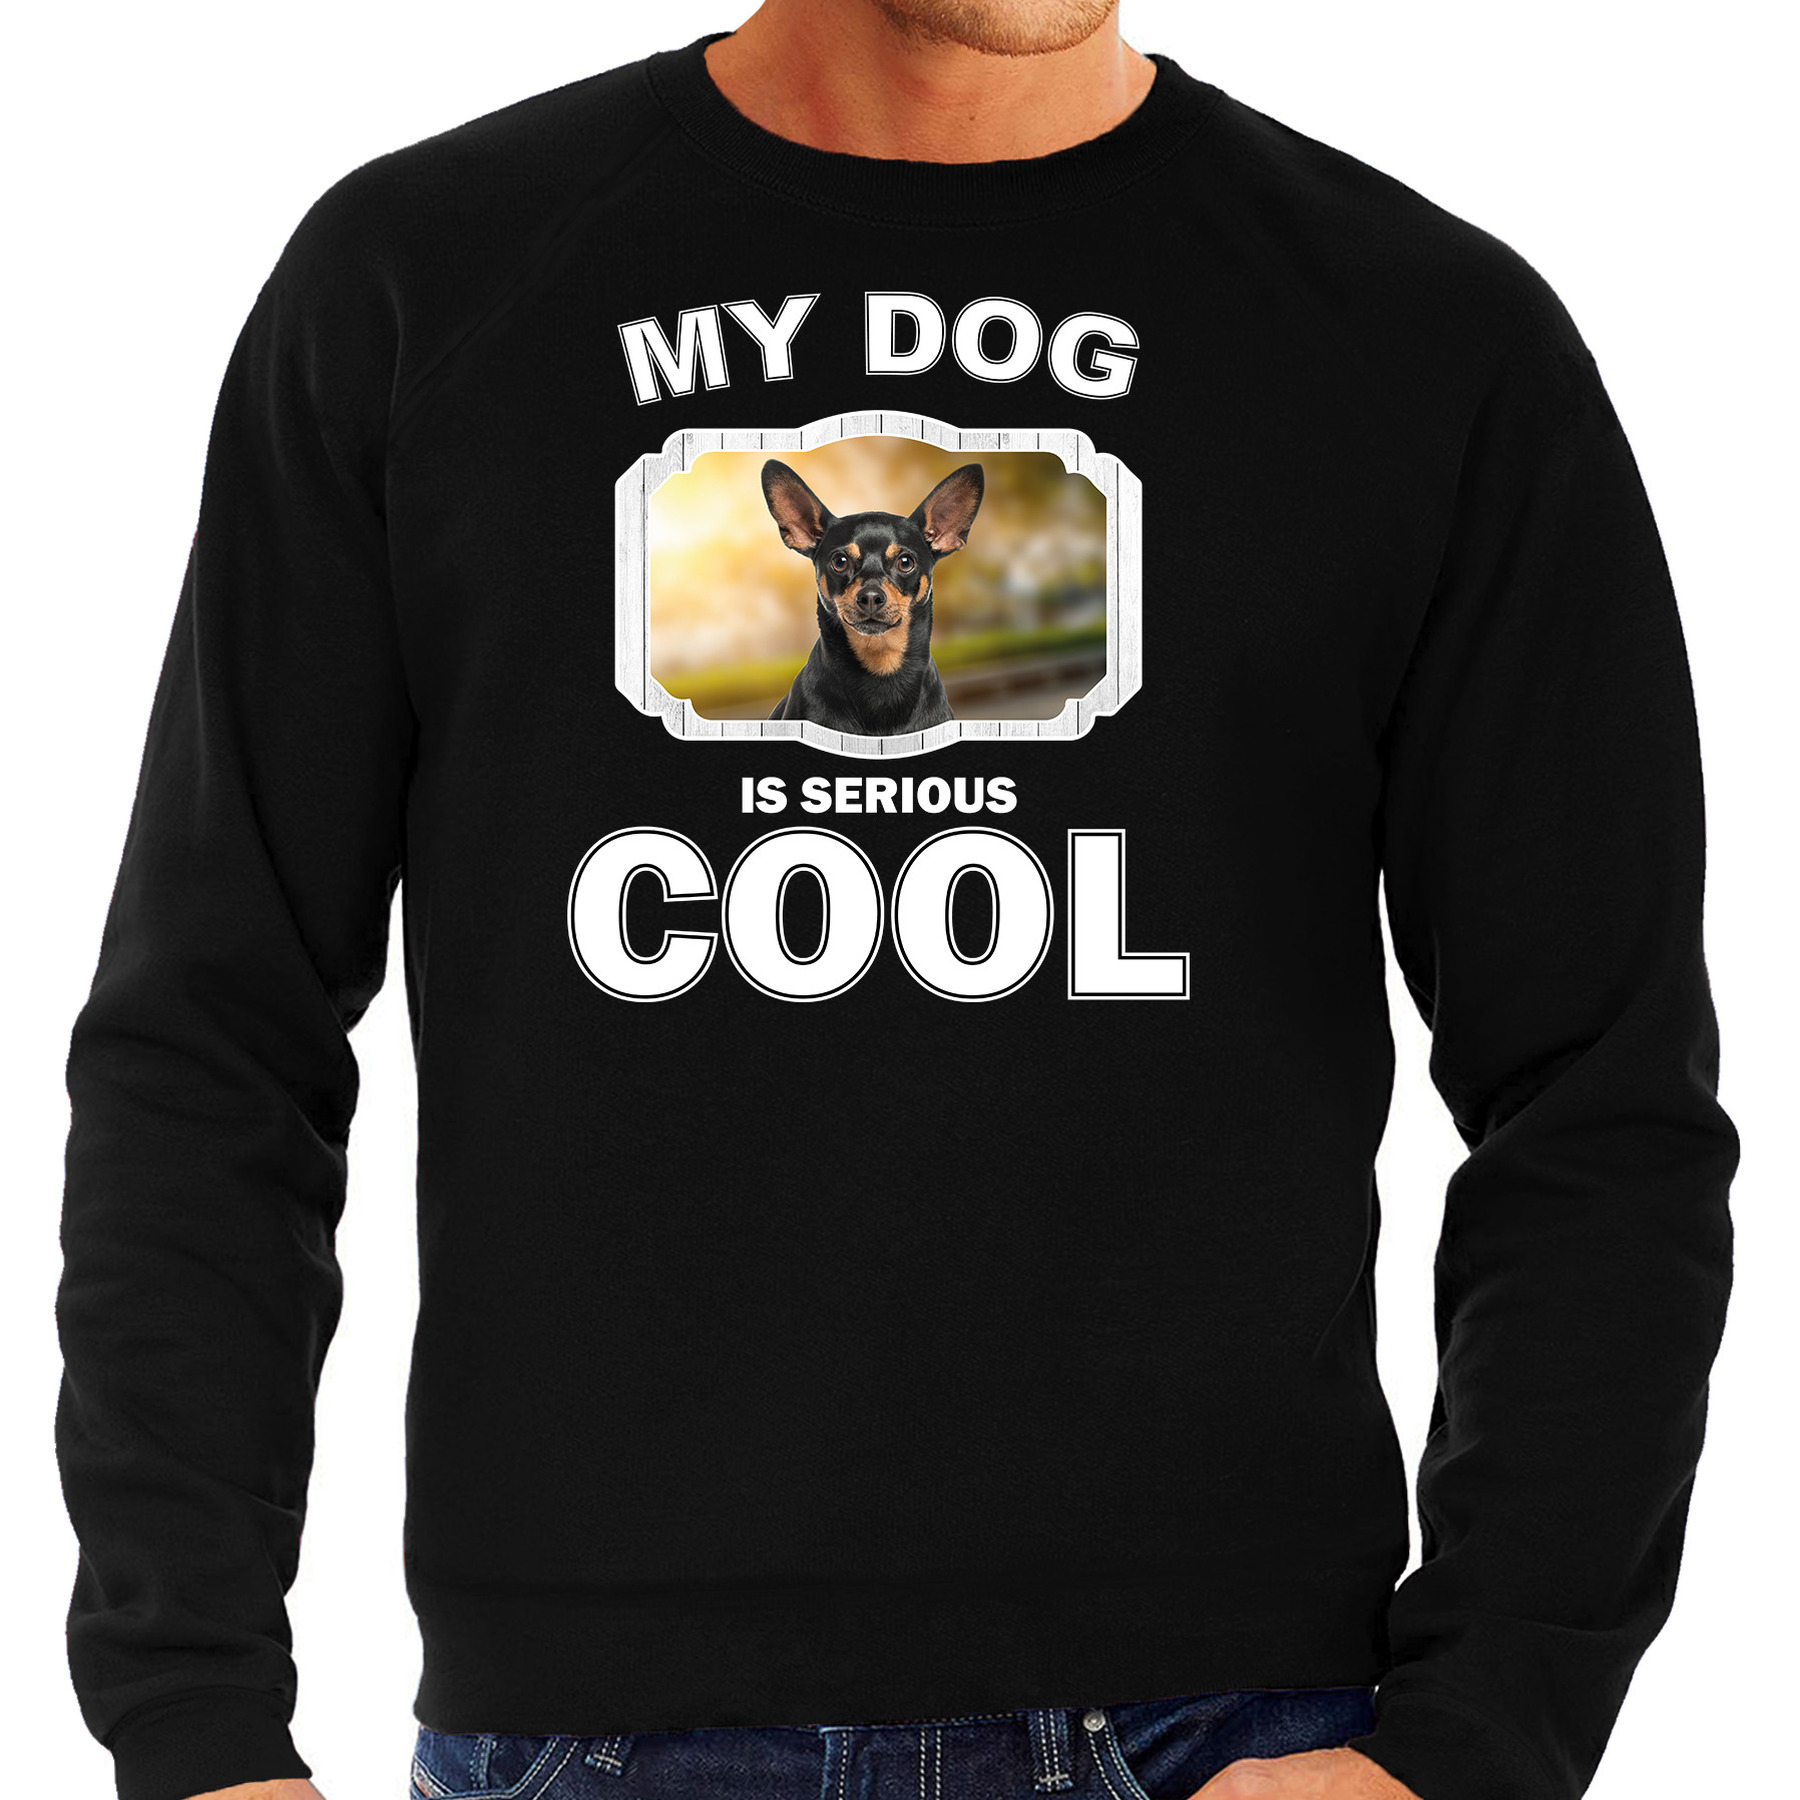 Dwergpinscher honden sweater-trui my dog is serious cool zwart voor heren